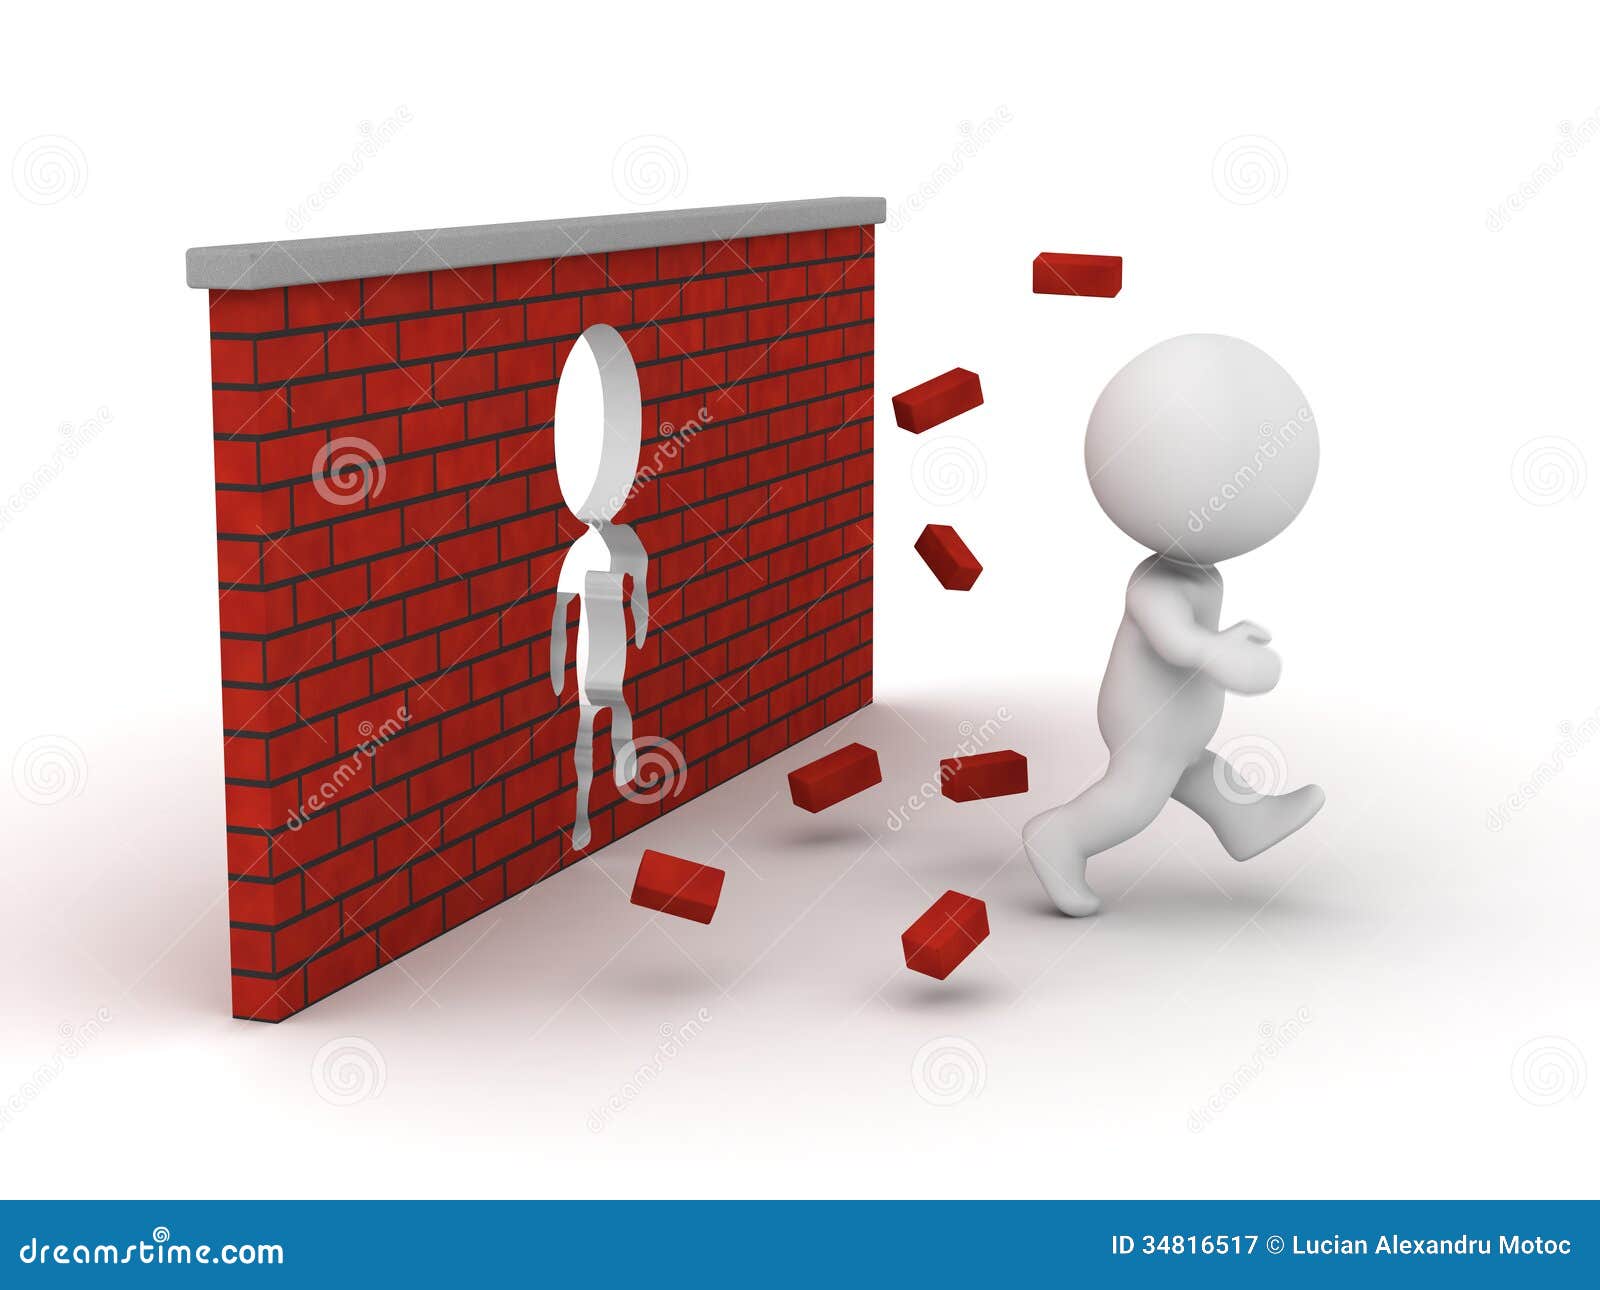 d-man-running-brick-wall-guy-has-run-made-shaped-hole-34816517.jpg